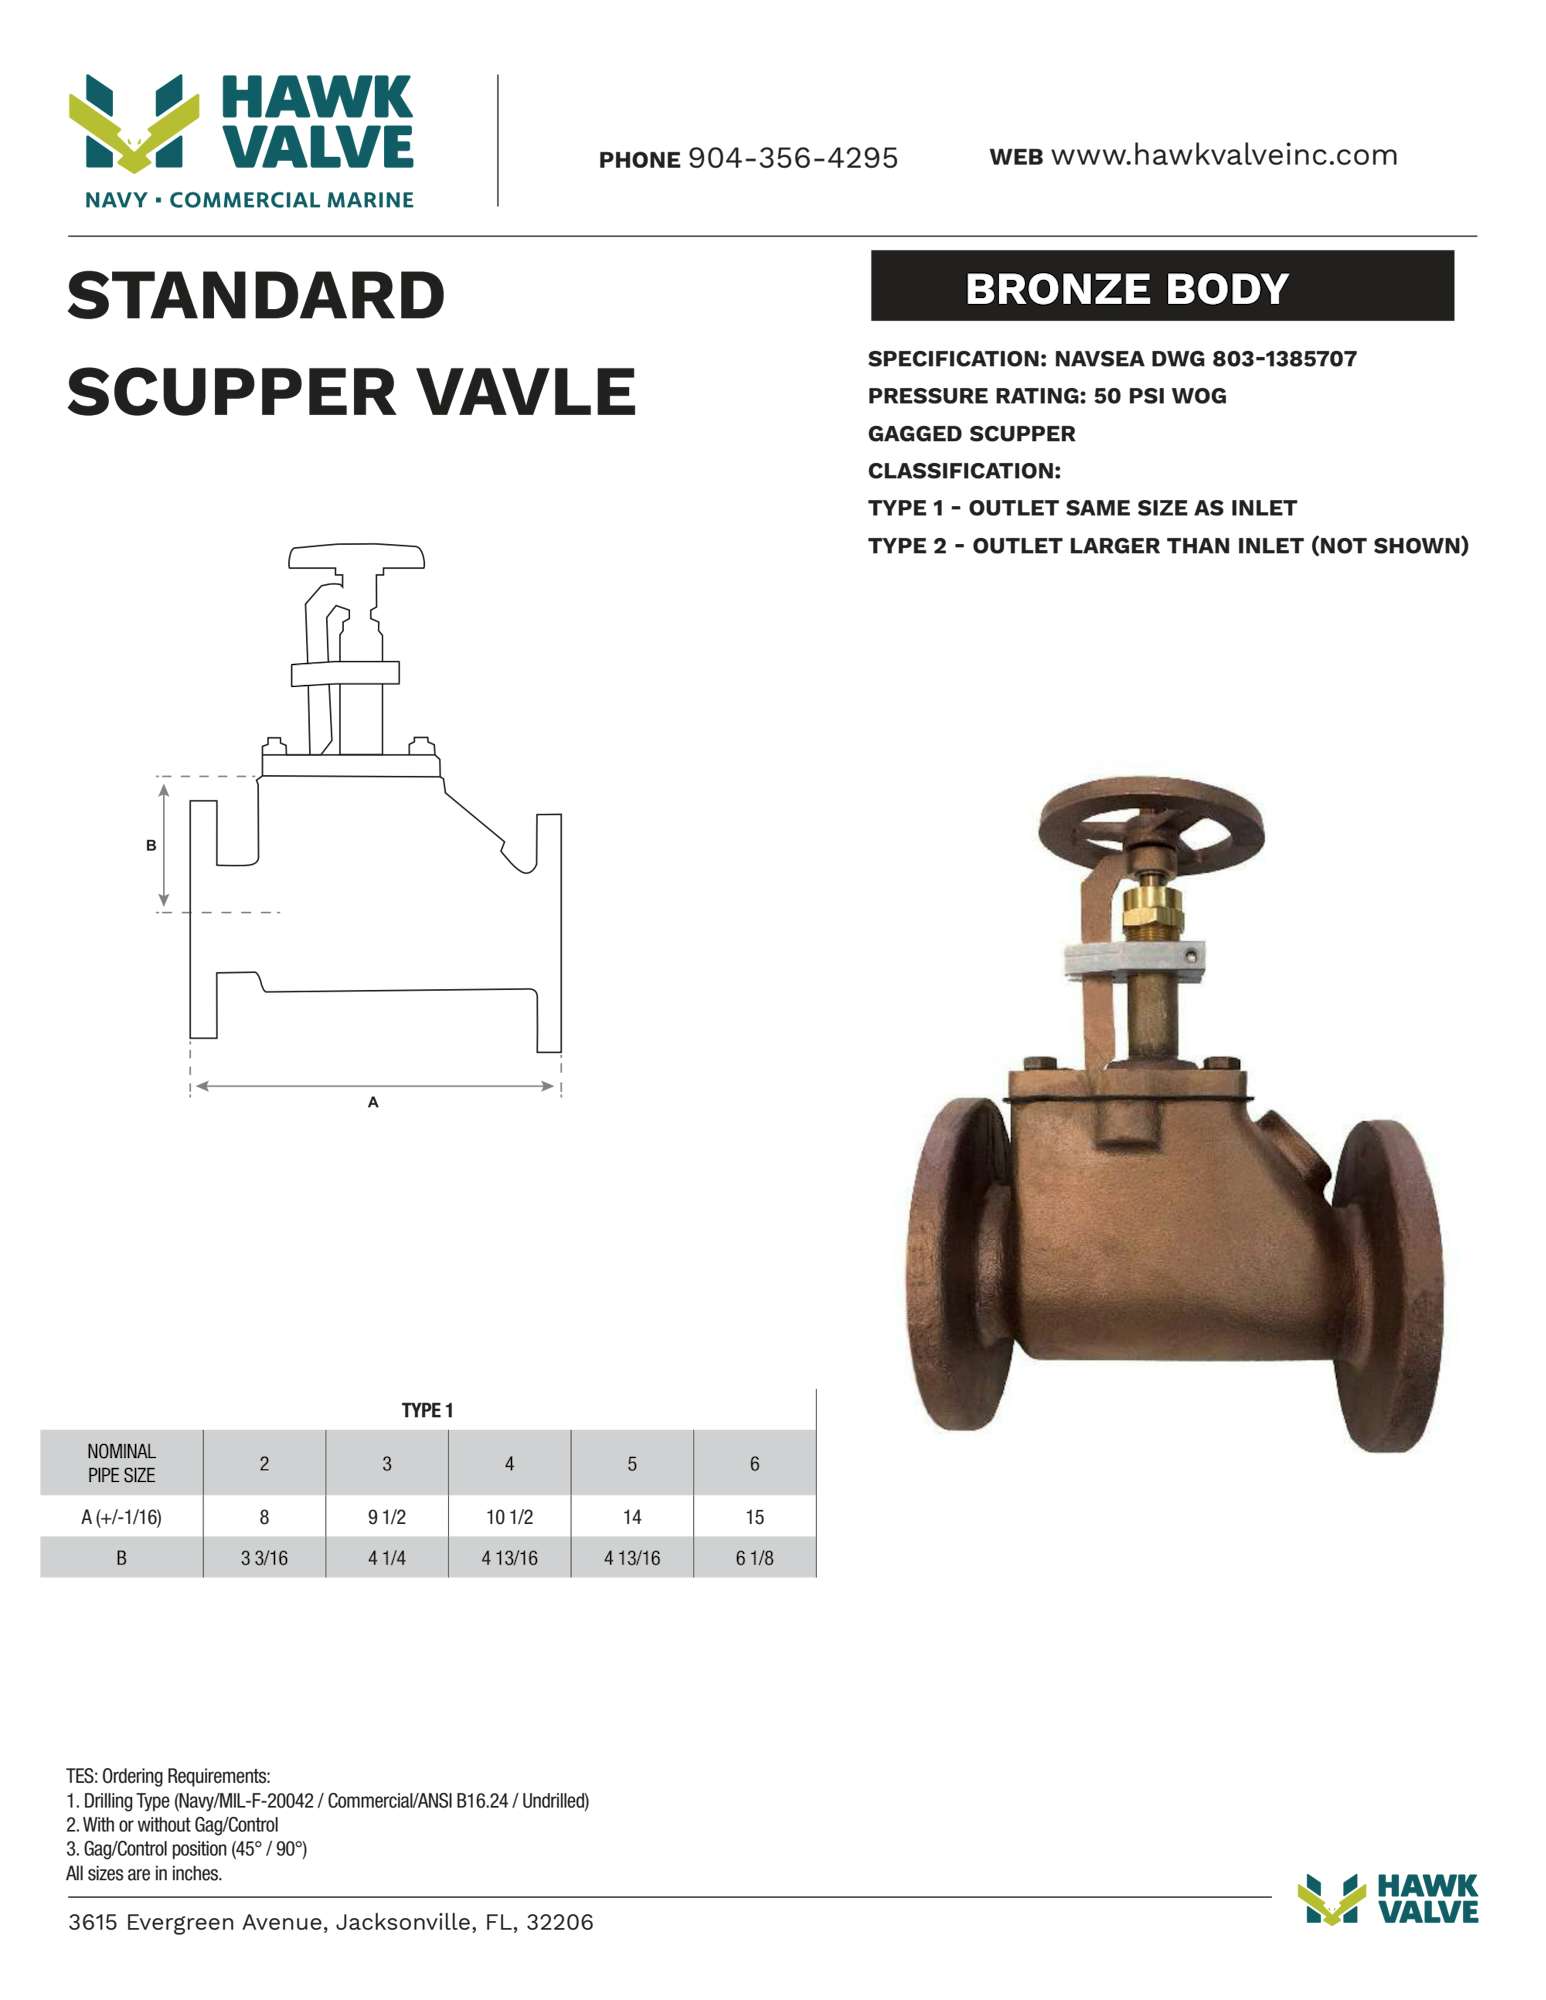 BB-Standard-Scupper-valve.pdf